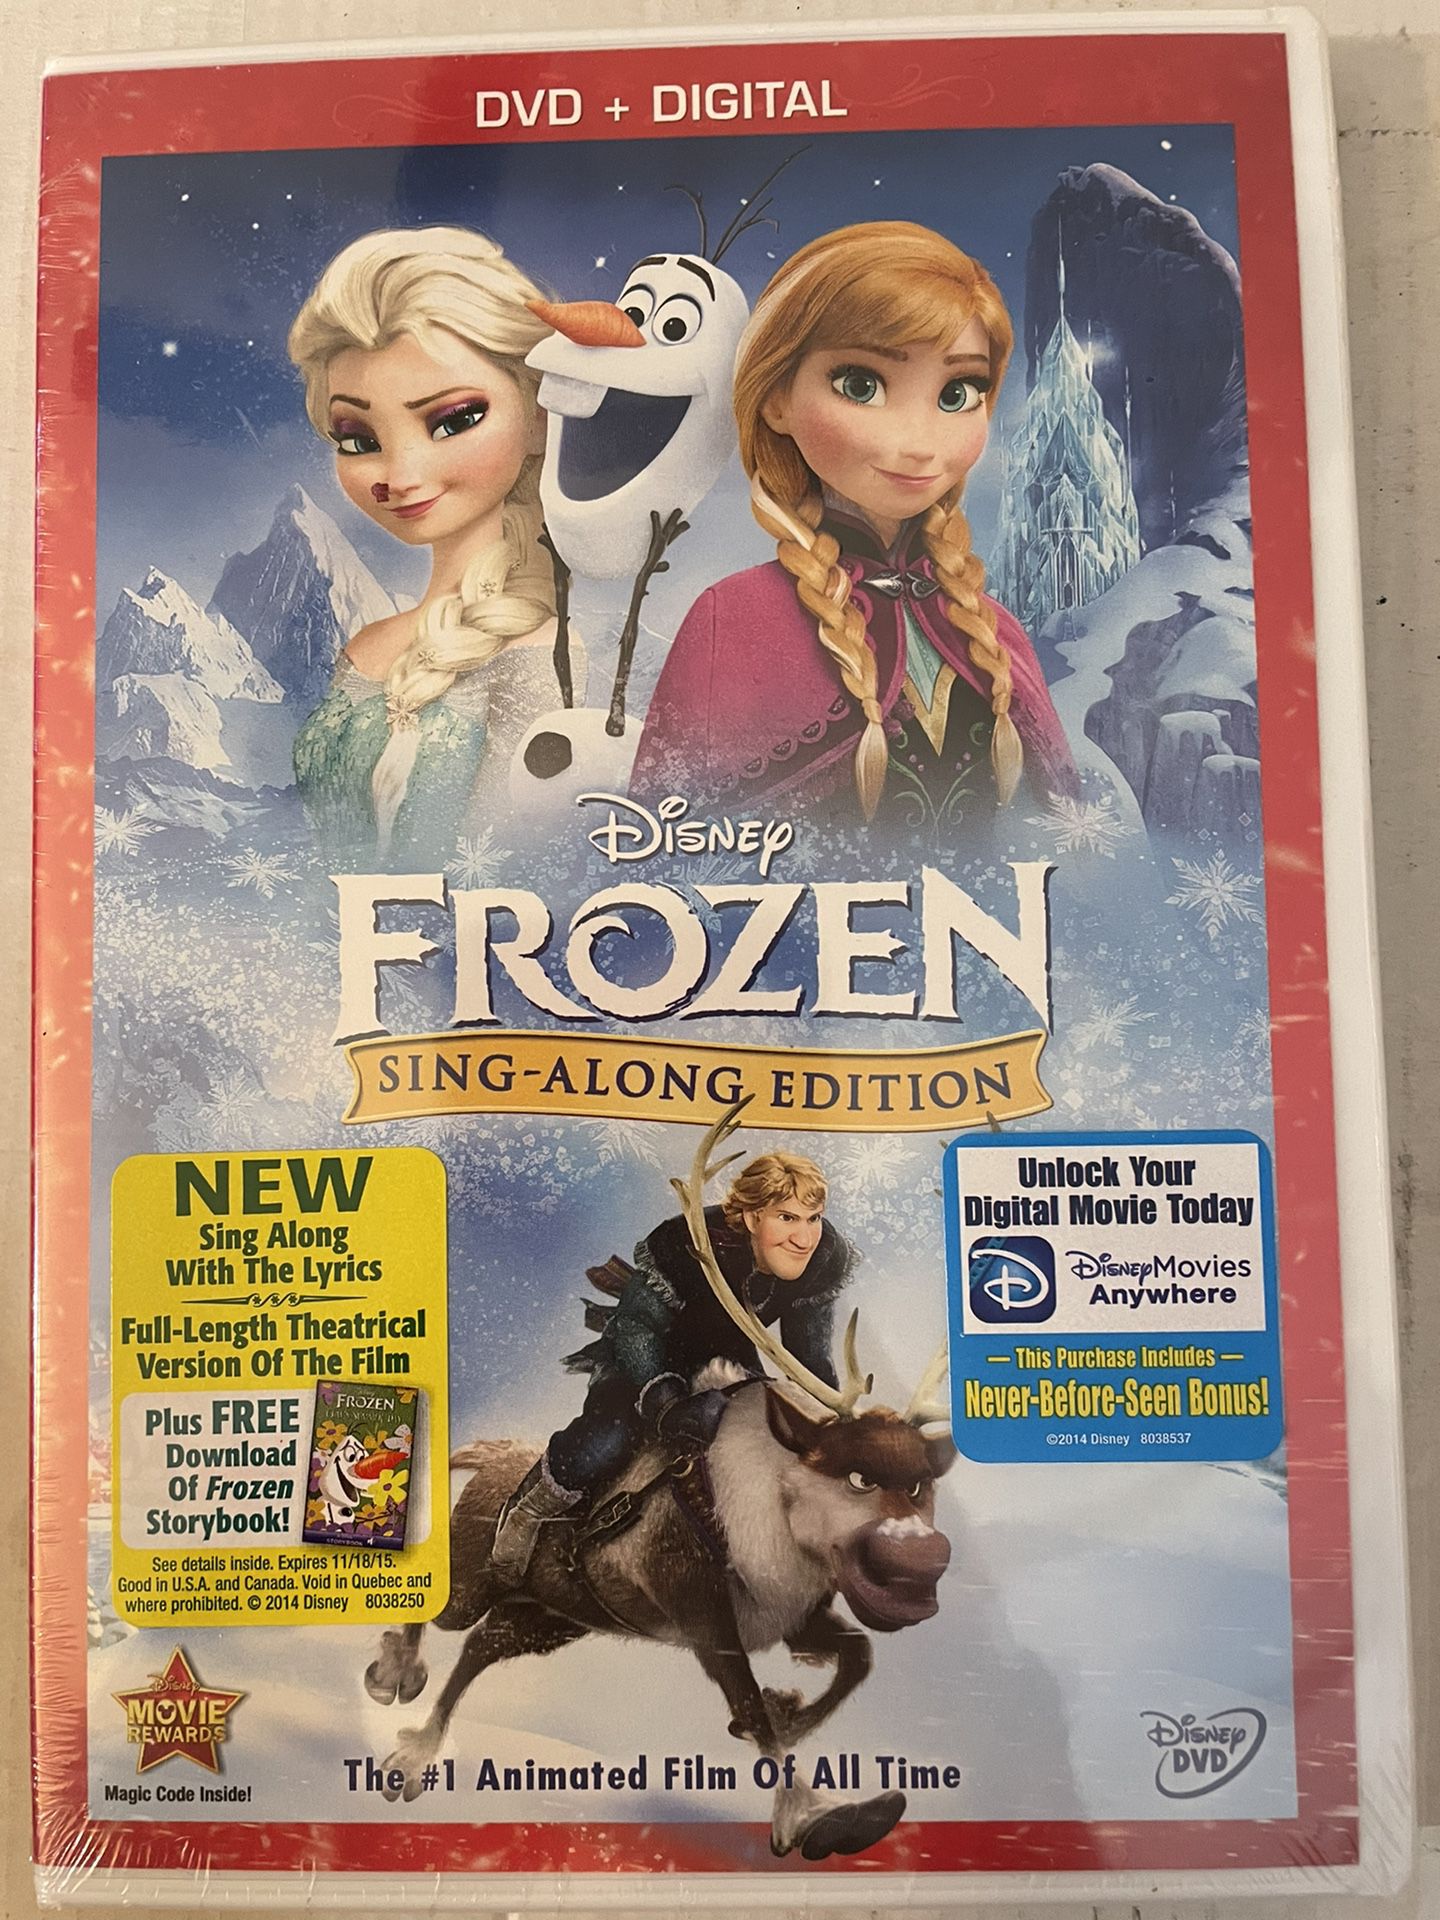 Disney’s FROZEN SING-ALONG EDITION  (DVD + Digital) NEW